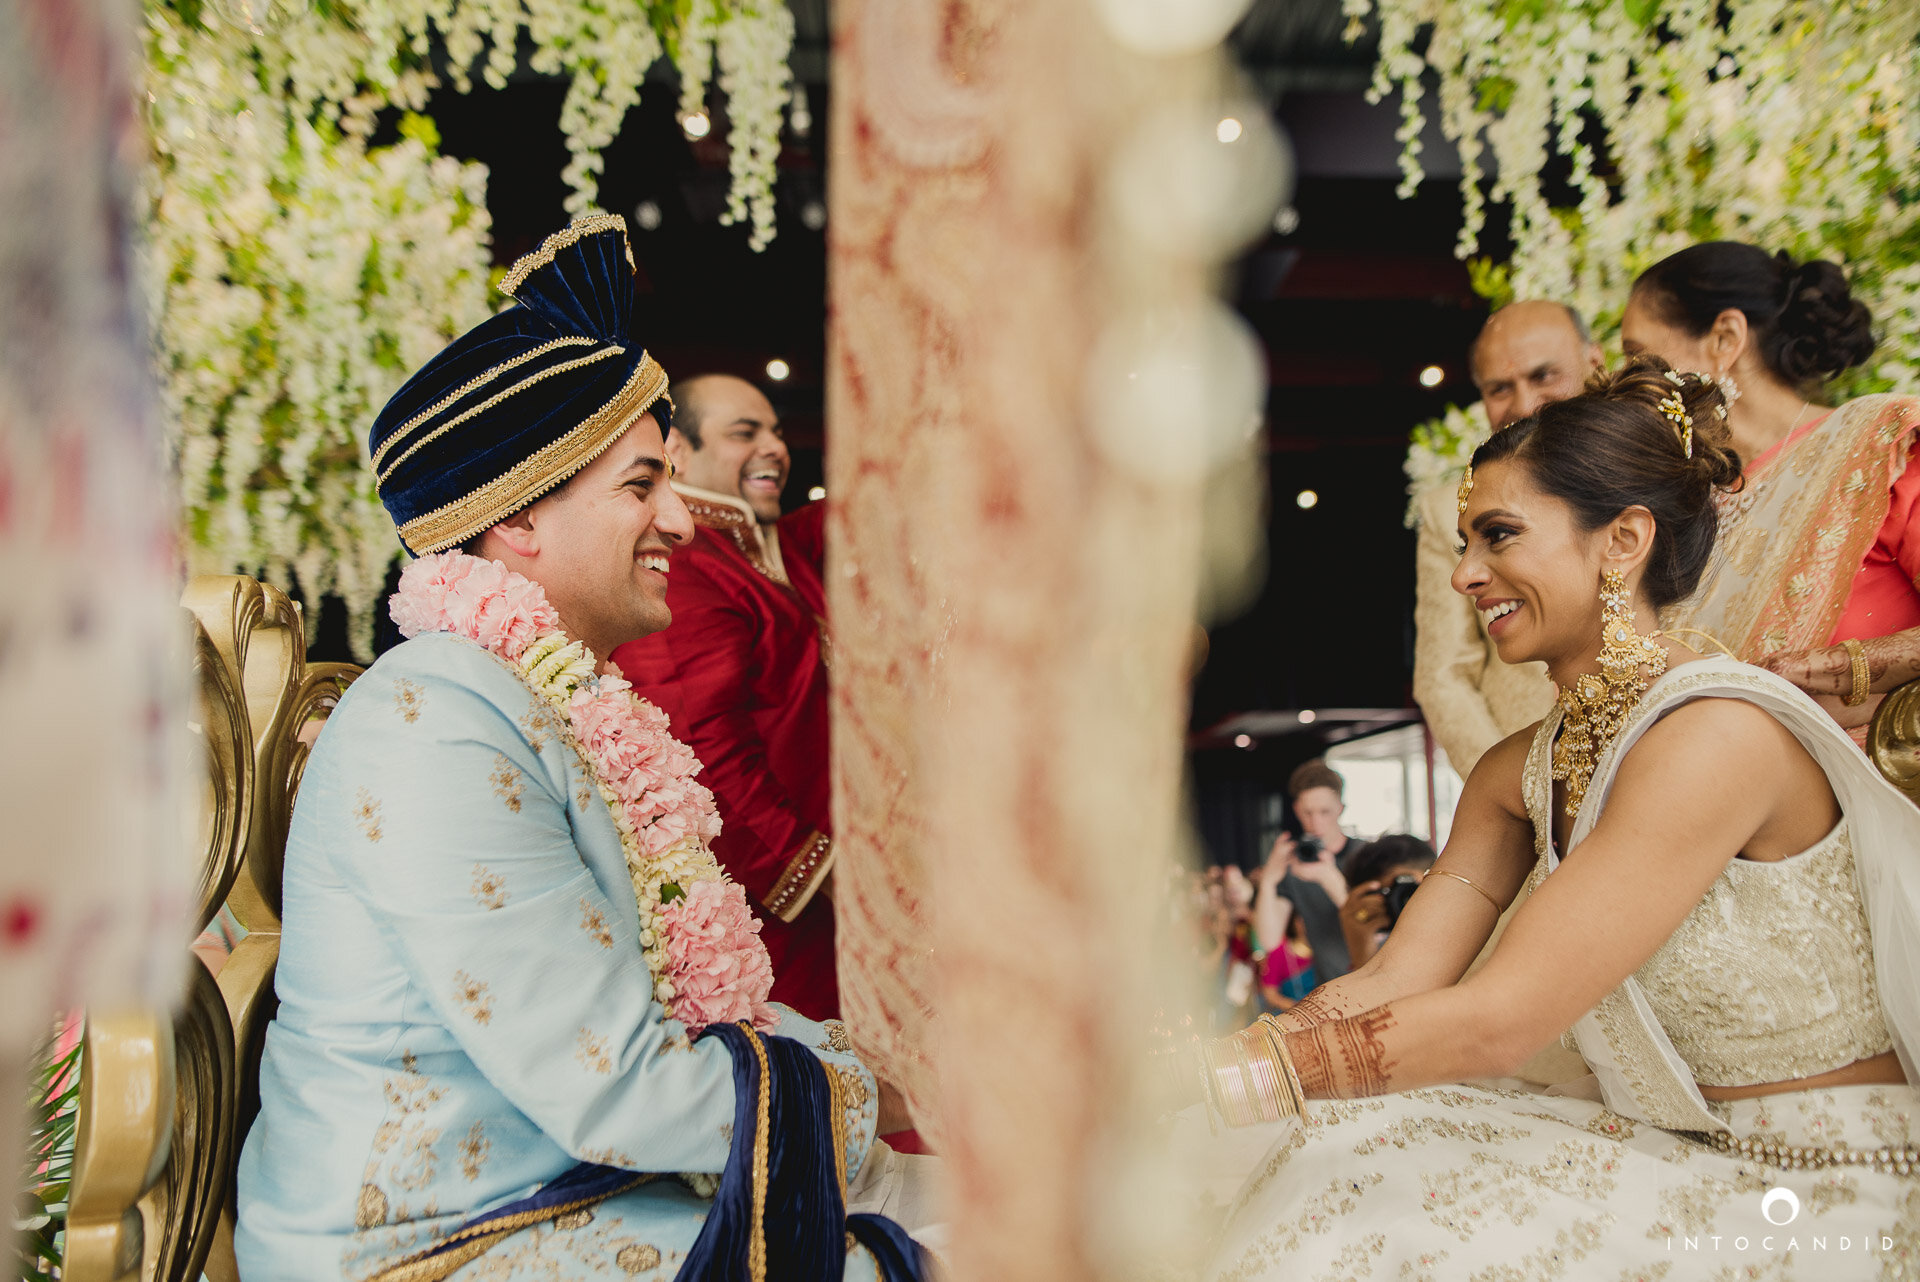 Chicago_Indian_Wedding_Photographer_Intocandid_Photography_Ketan & Manasvi_32.JPG